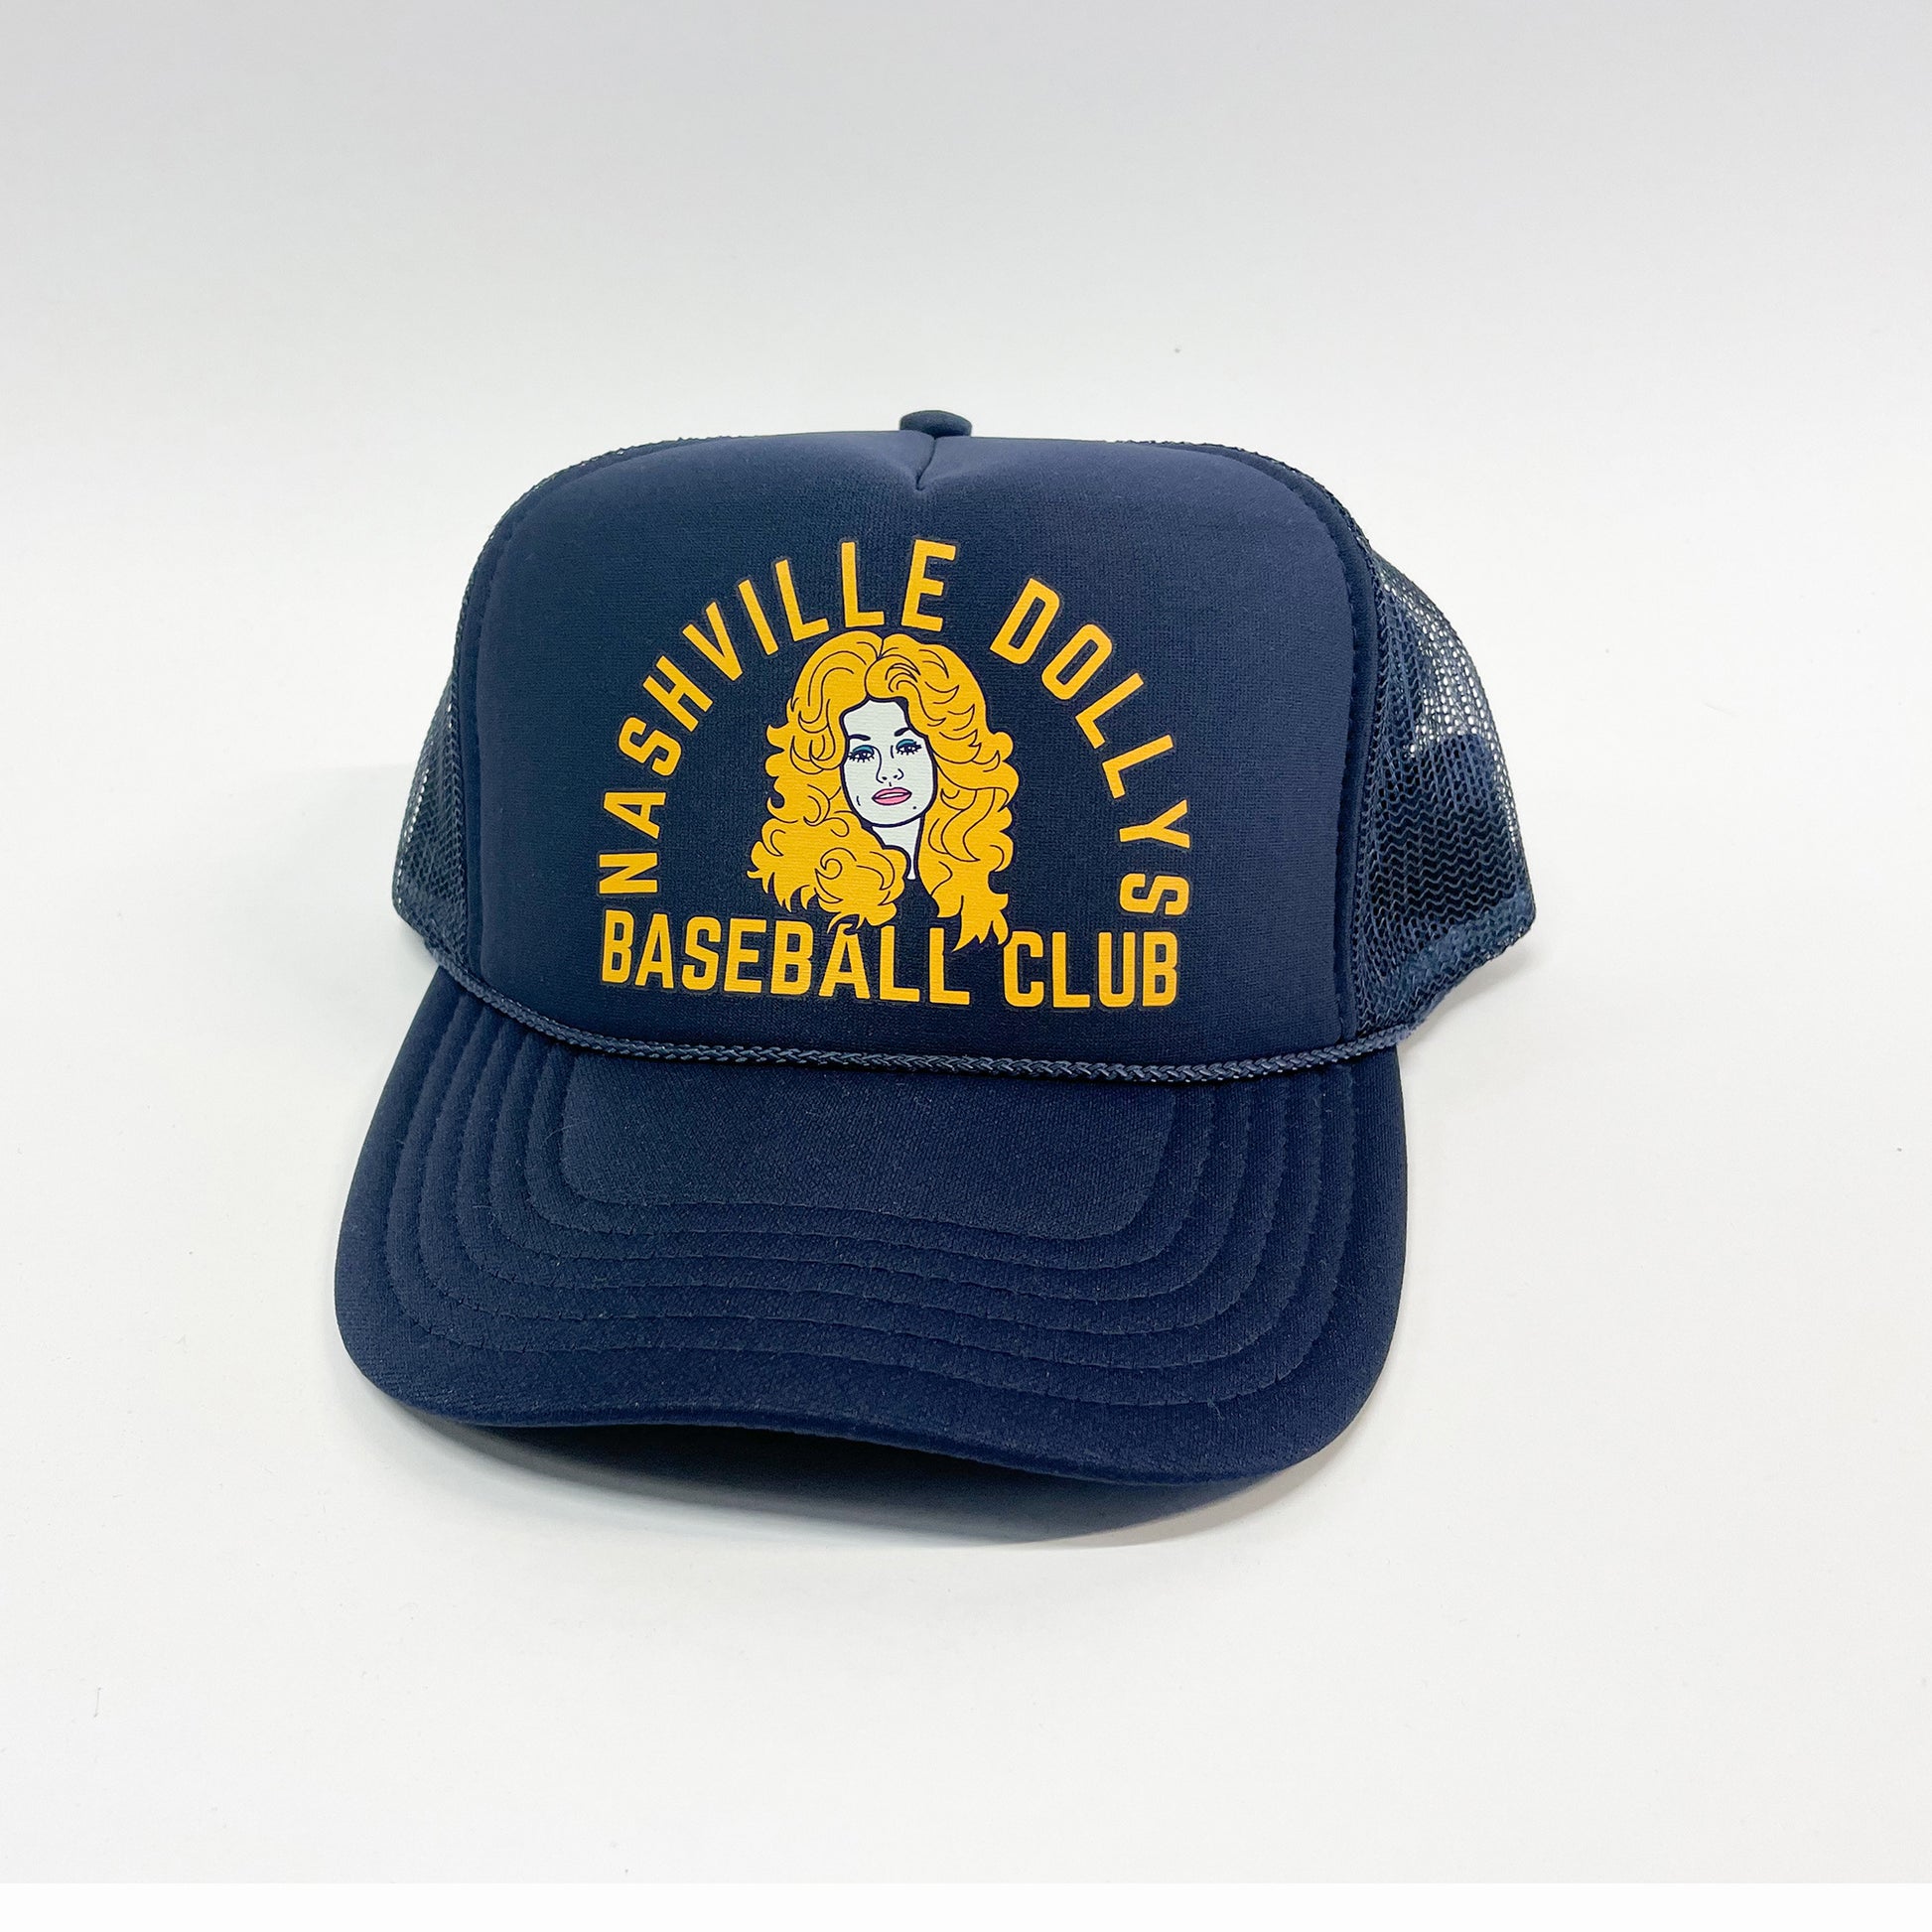 Nashville Dollys Baseball club navy trucker hat